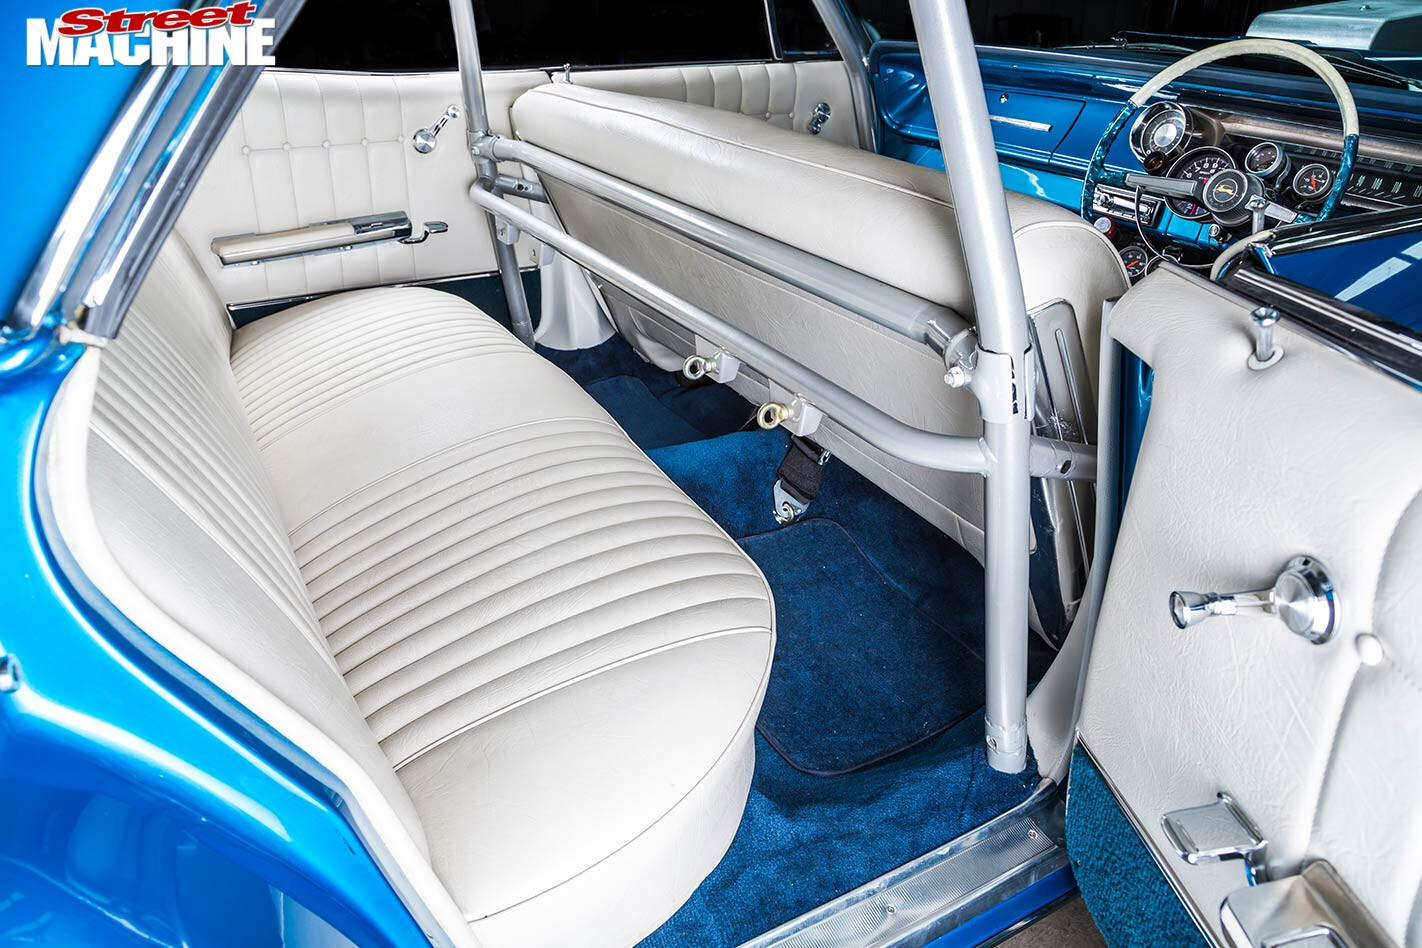 Chev Impala interior rear